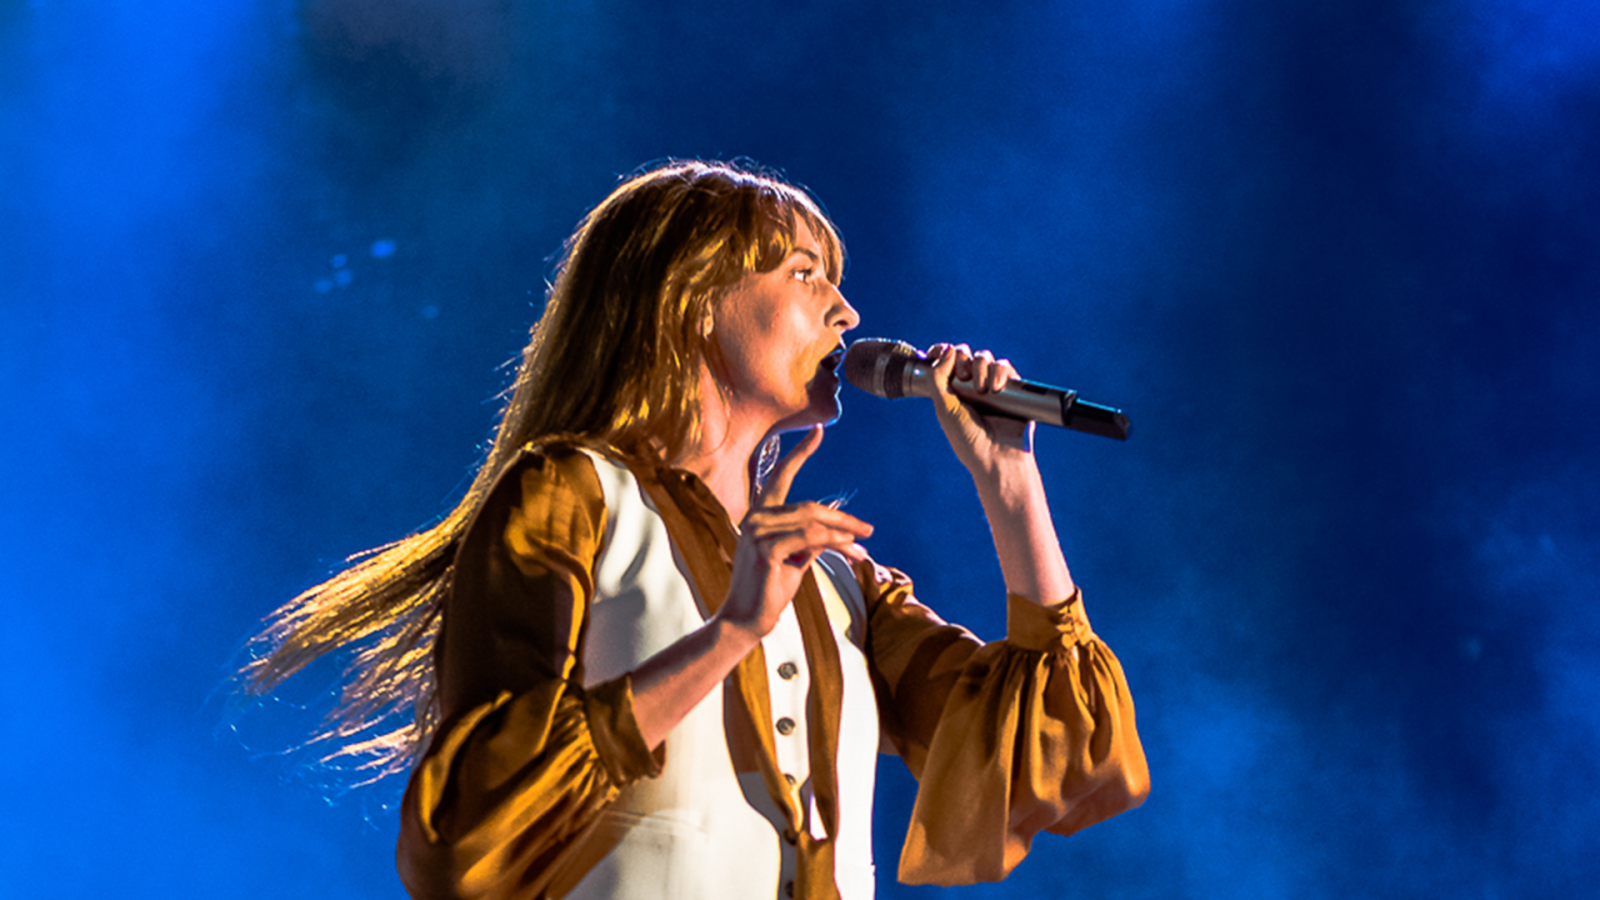 Escucha “Hunger” el nuevo tema de Florence + The Machine